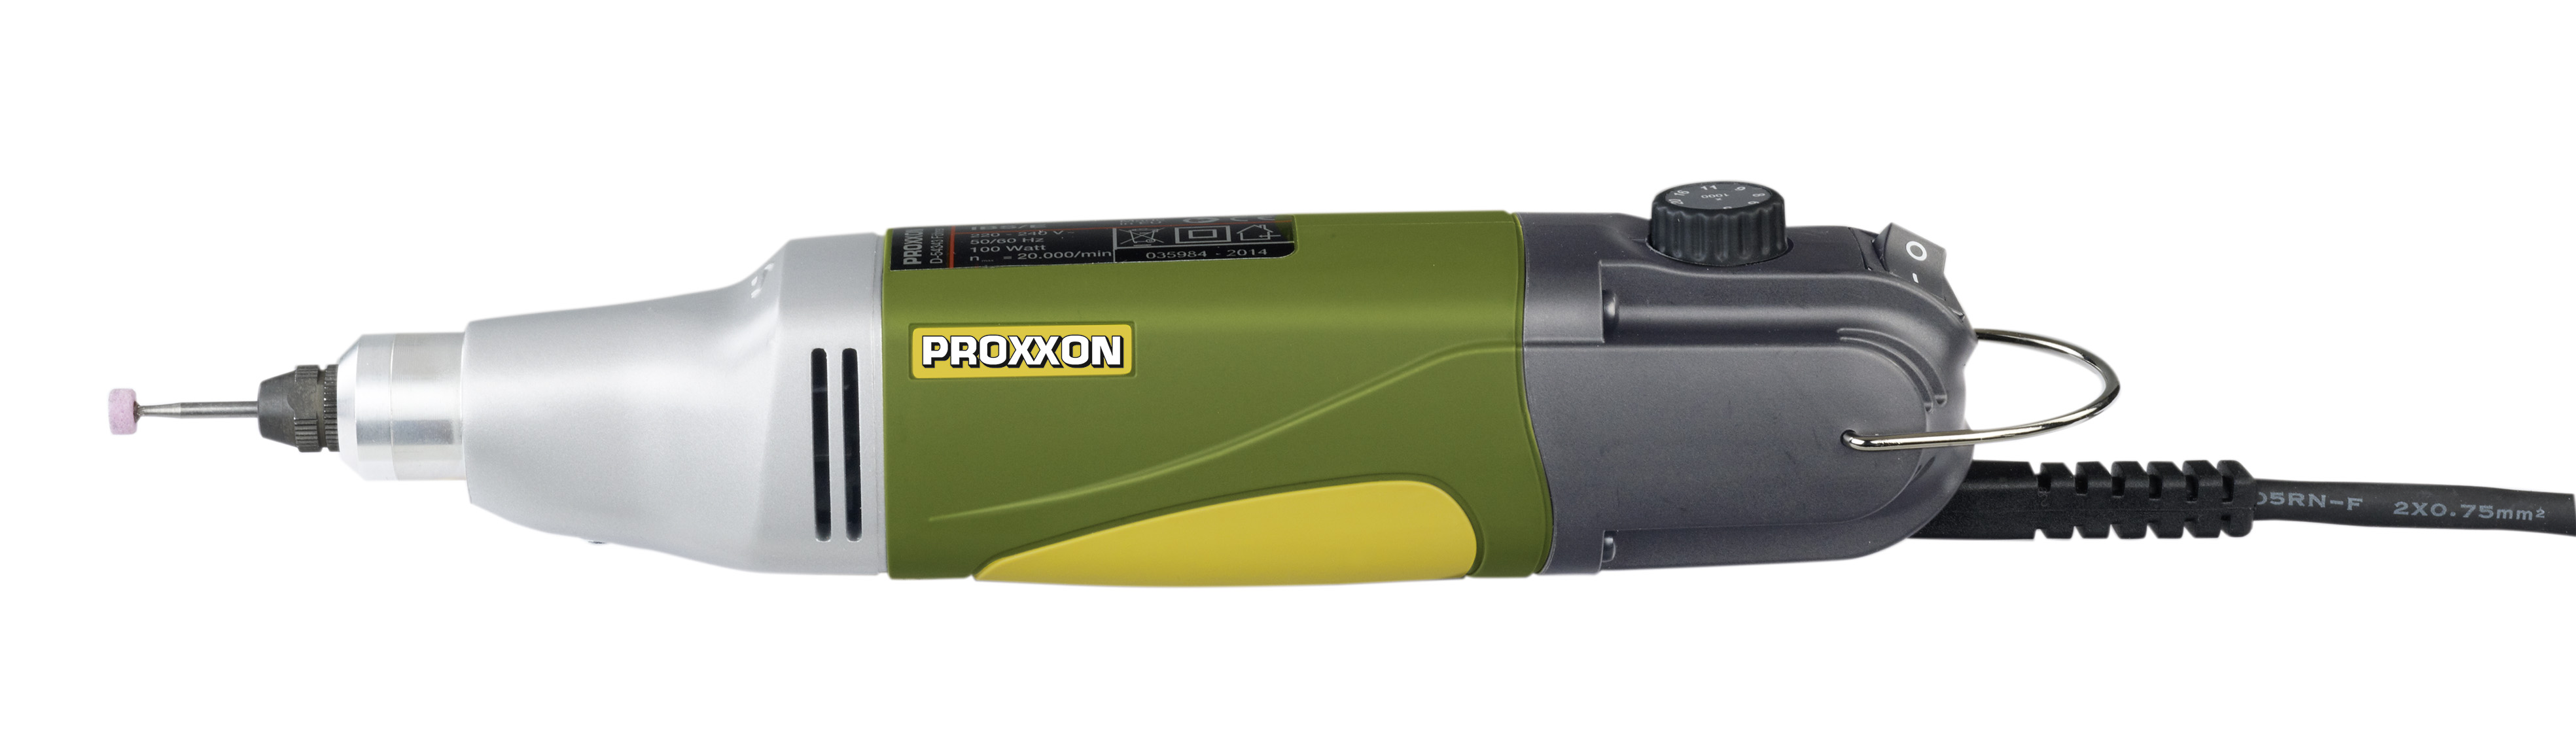 Proxxon Industrie-Bohrschleifer